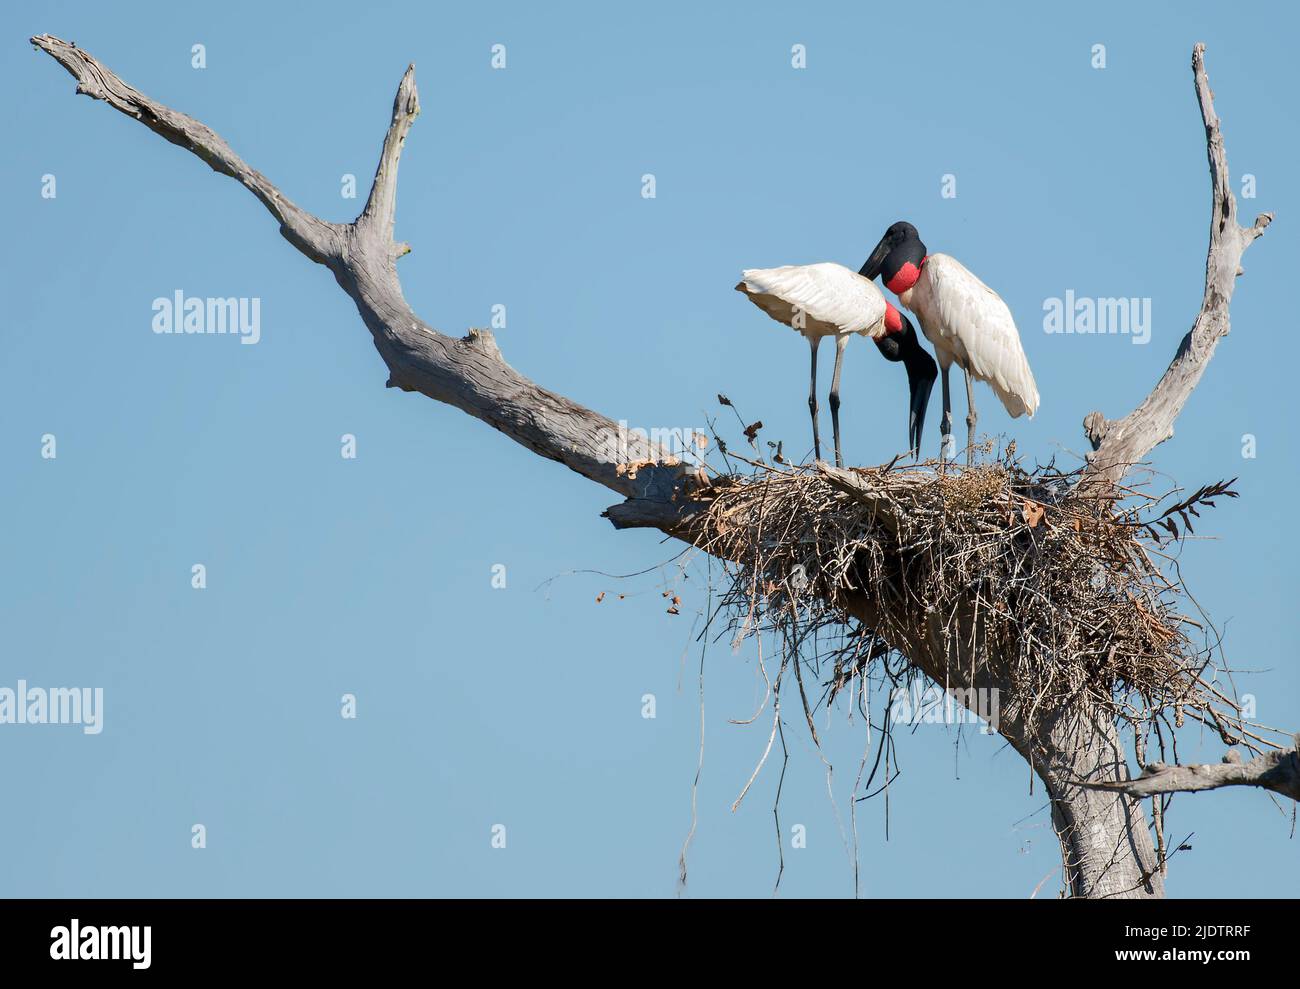 A pair of jabiru storks (Jabiru mycteria) nesting in Porto Jofre, Mato Grosso, Brazil. Stock Photo